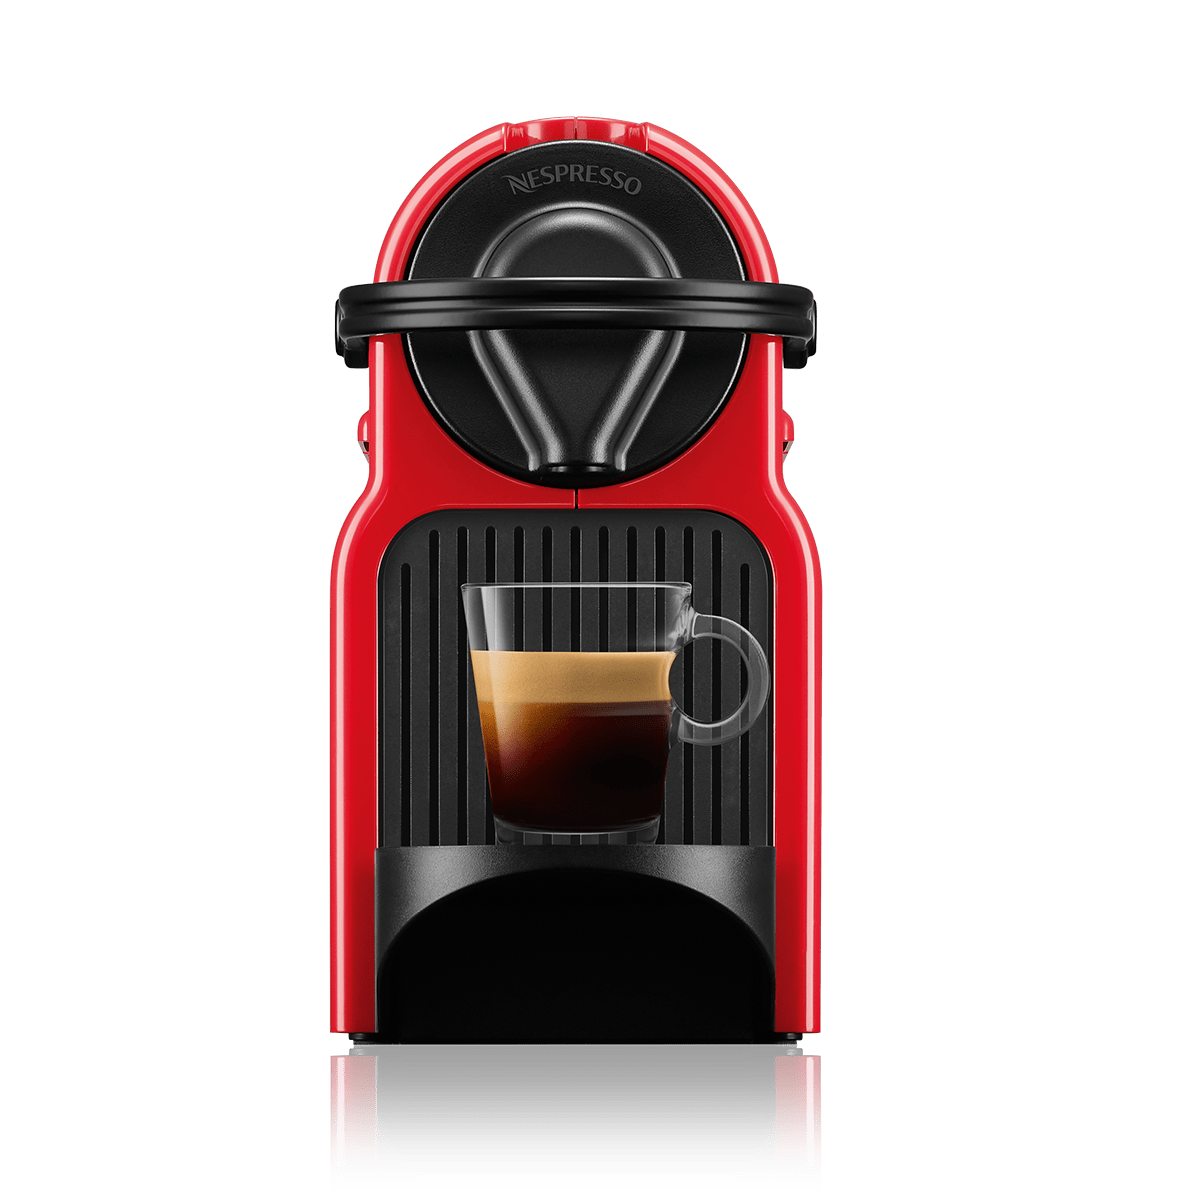 Inissia Red Nespresso coffee machine